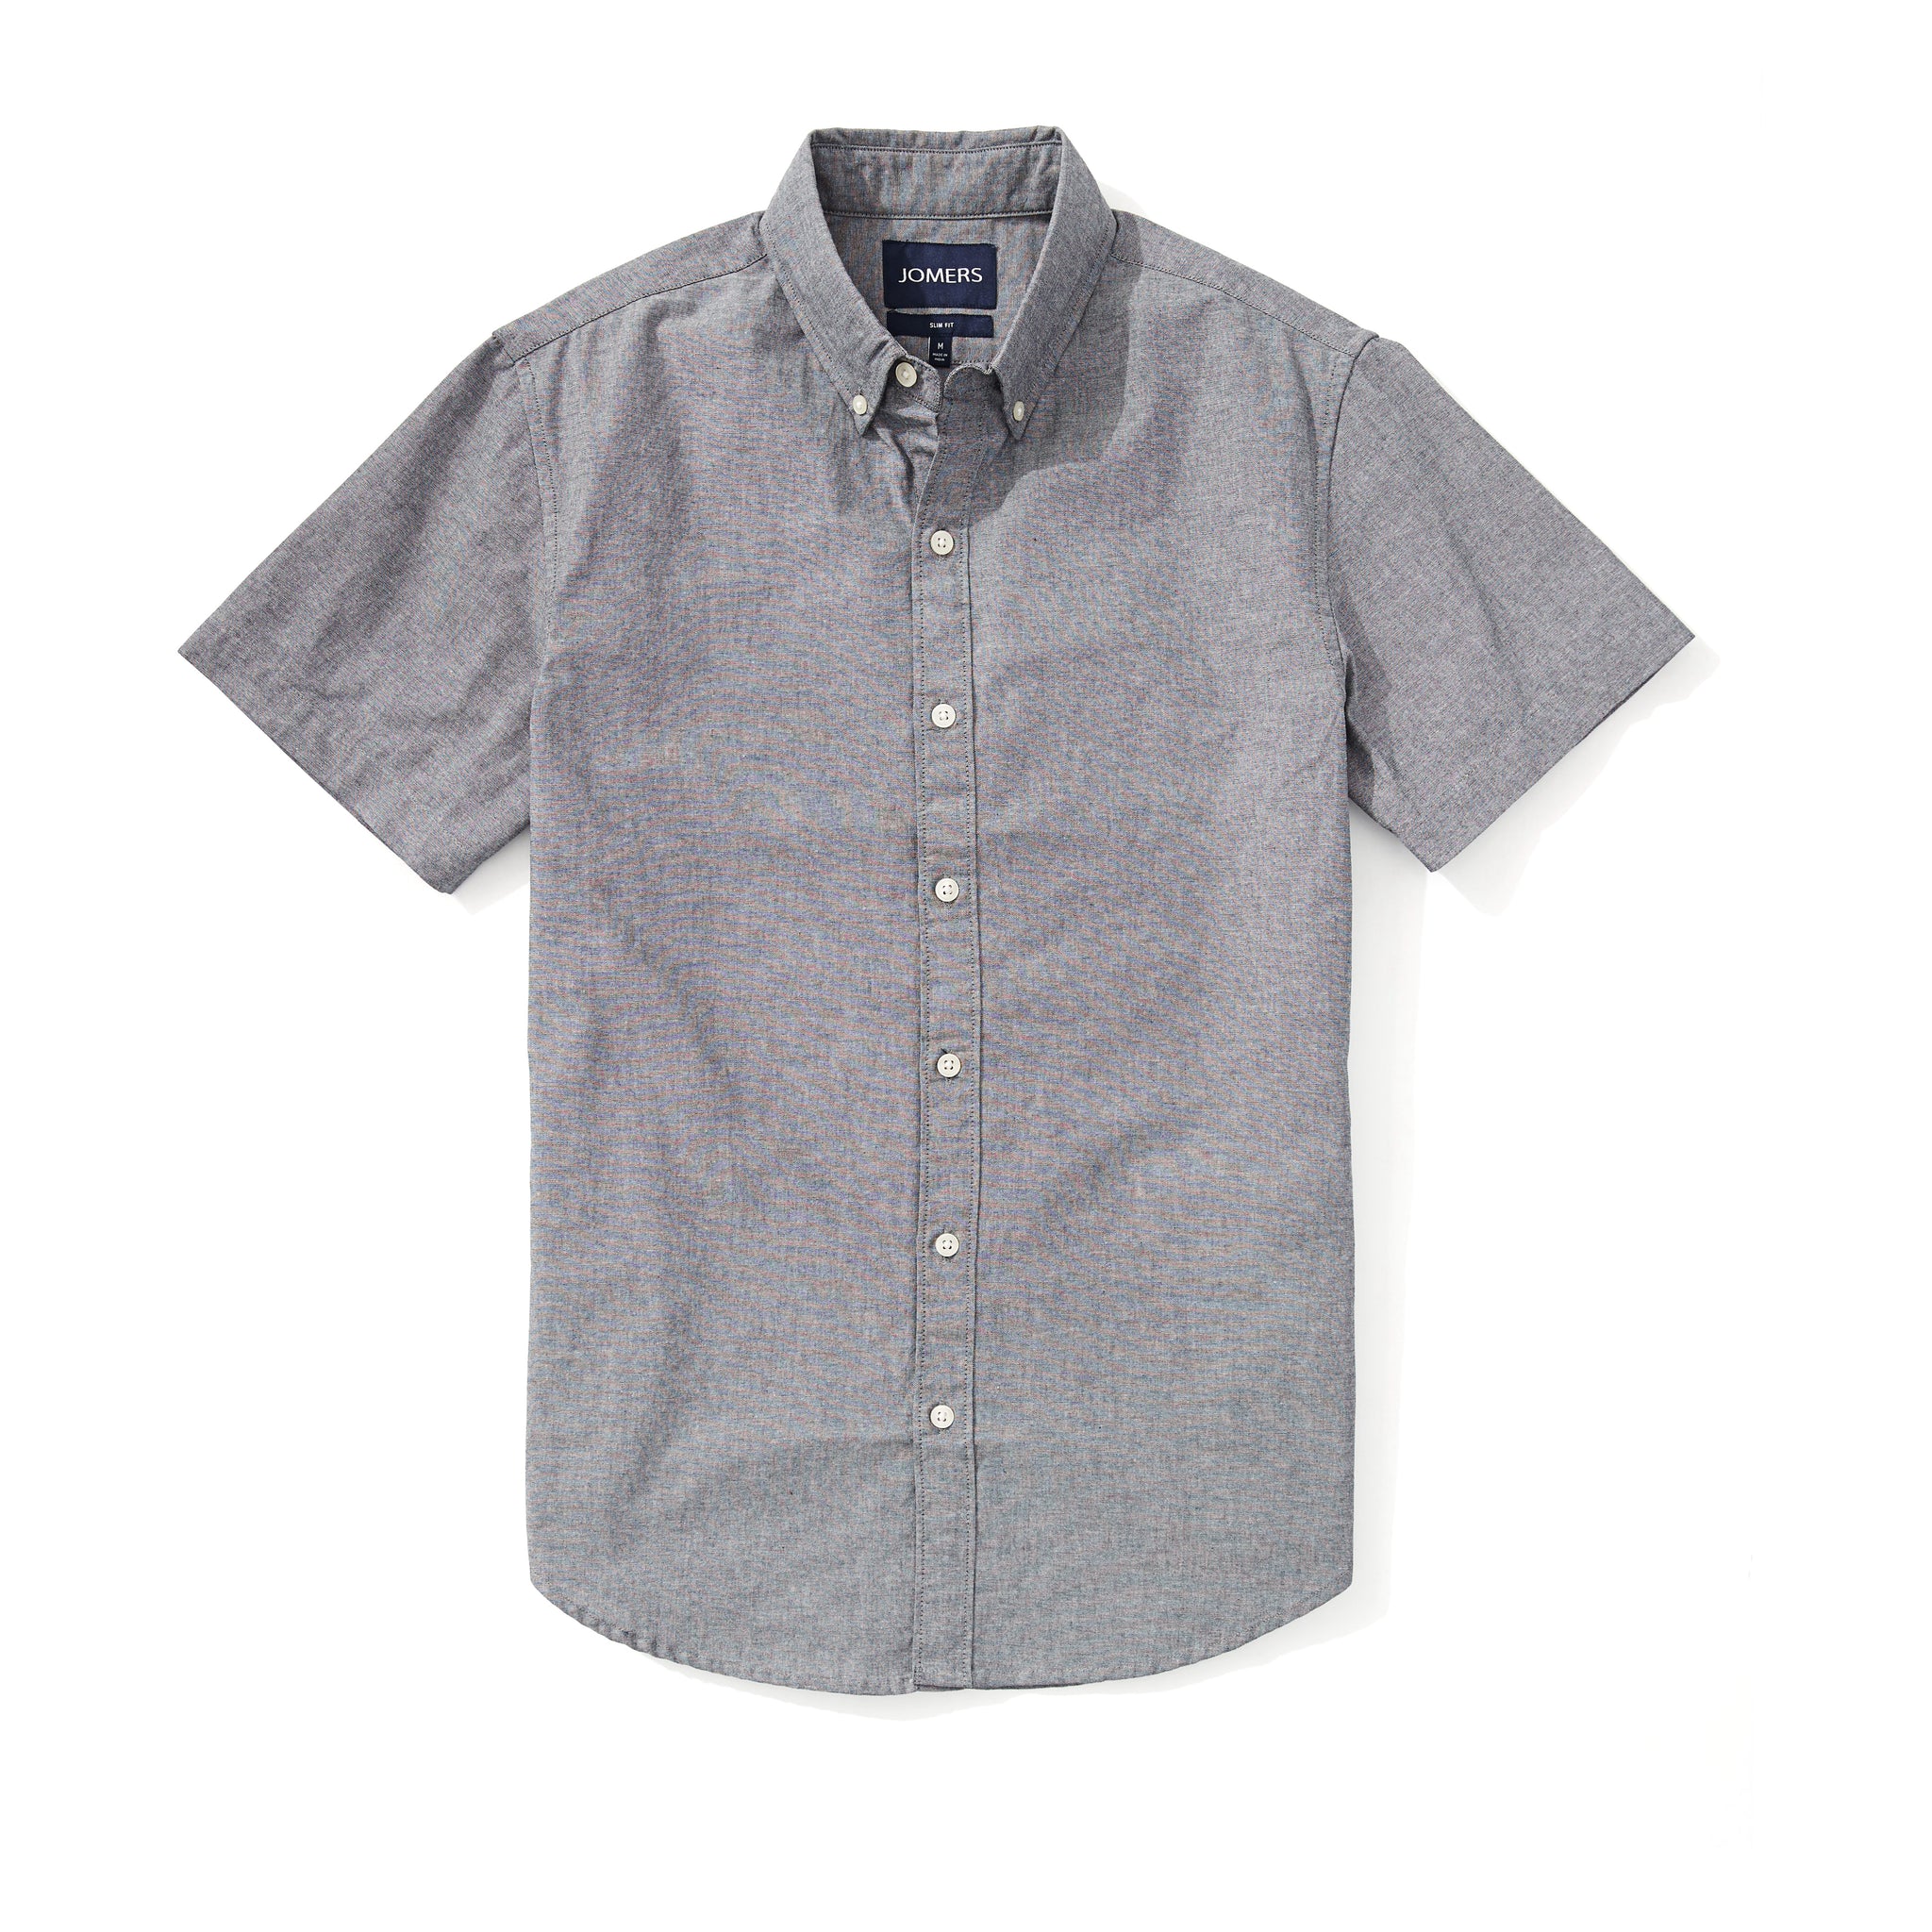 Japanese Chambray Short Sleeve Shirt - Gray - Jomers